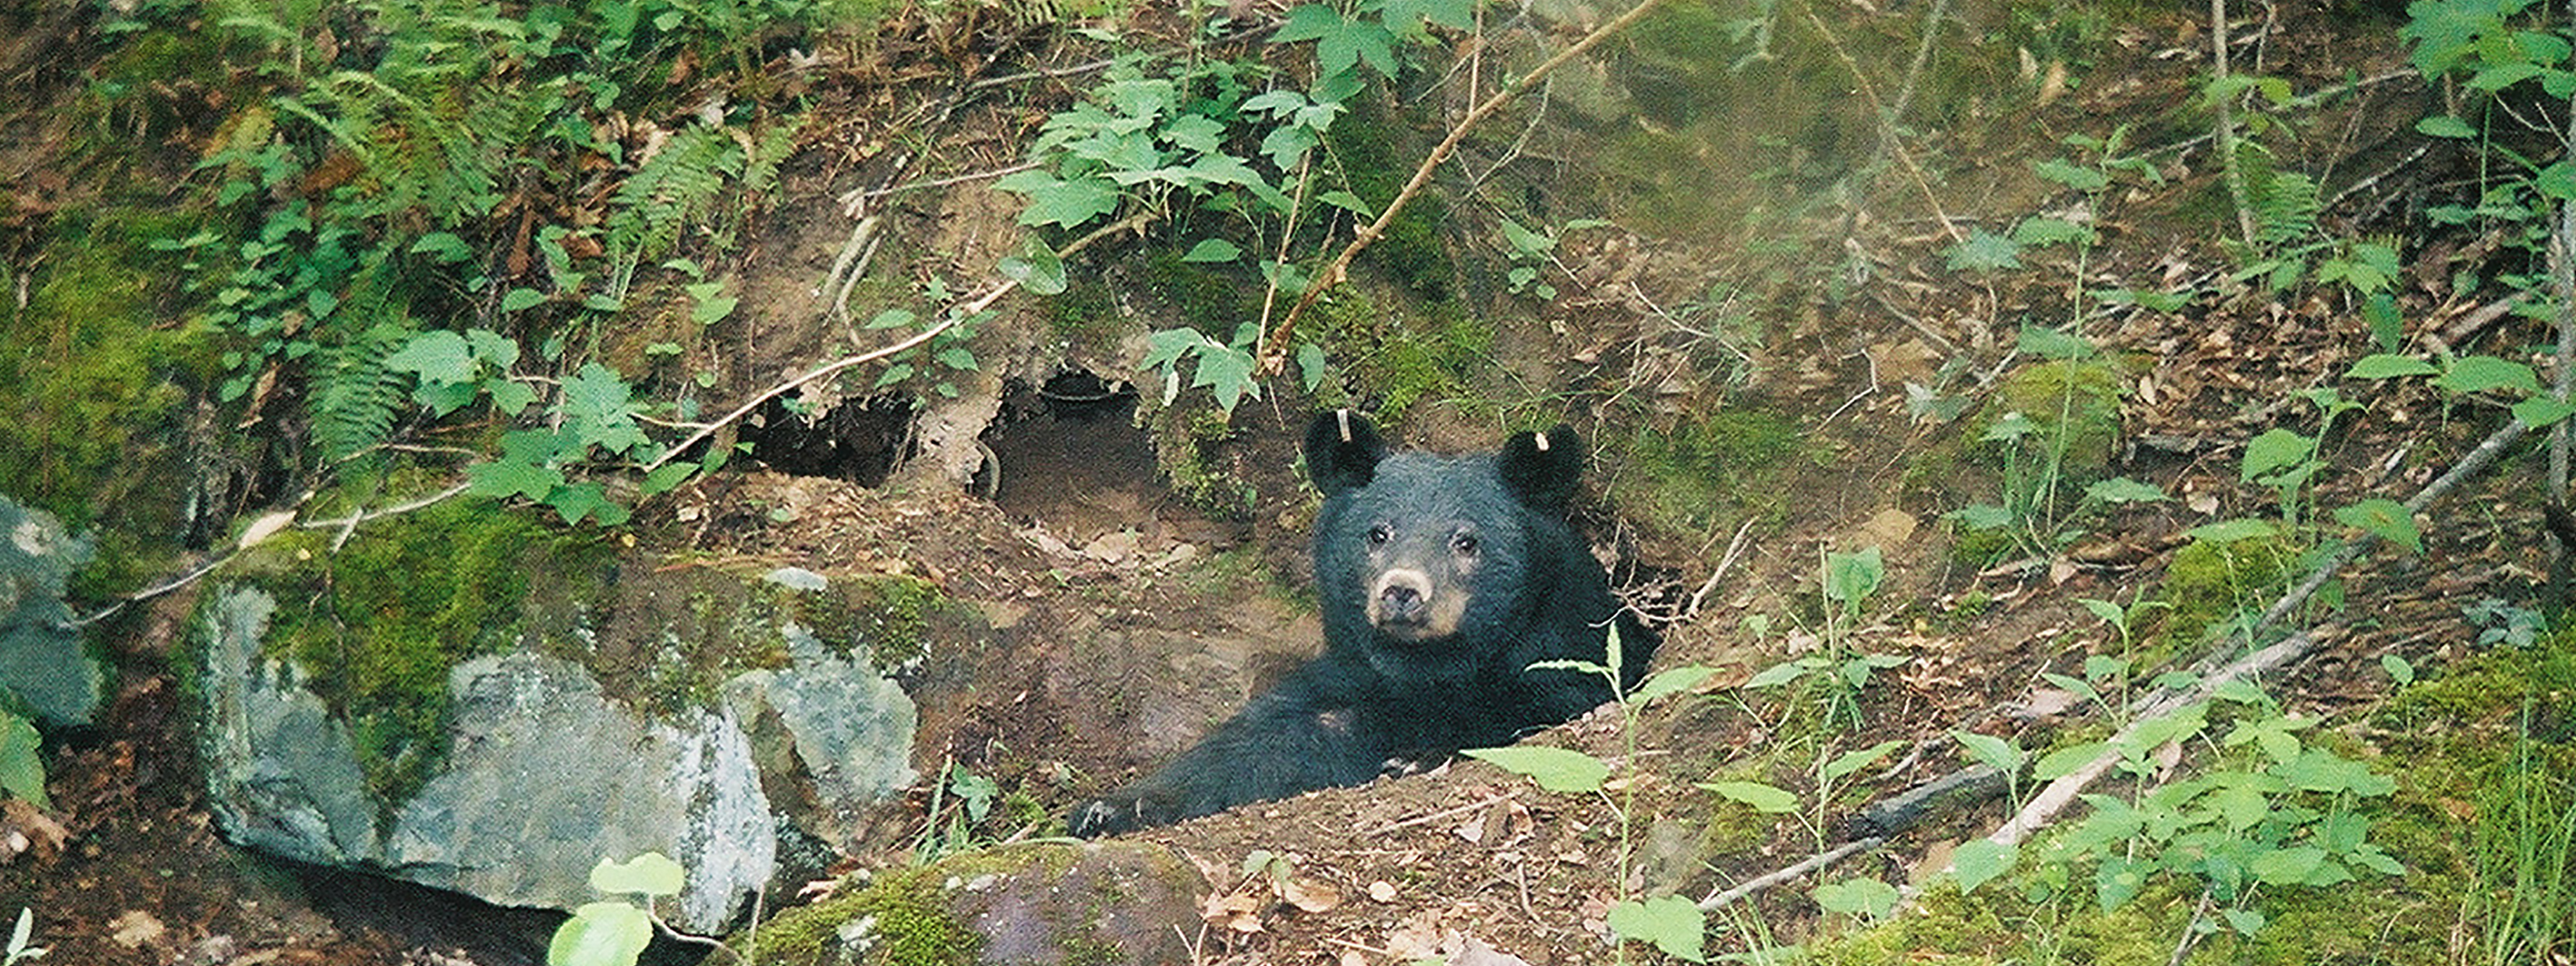 https://www.nps.gov/liri/planyourvisit/images/Wildlife-Safety-Bear.jpg